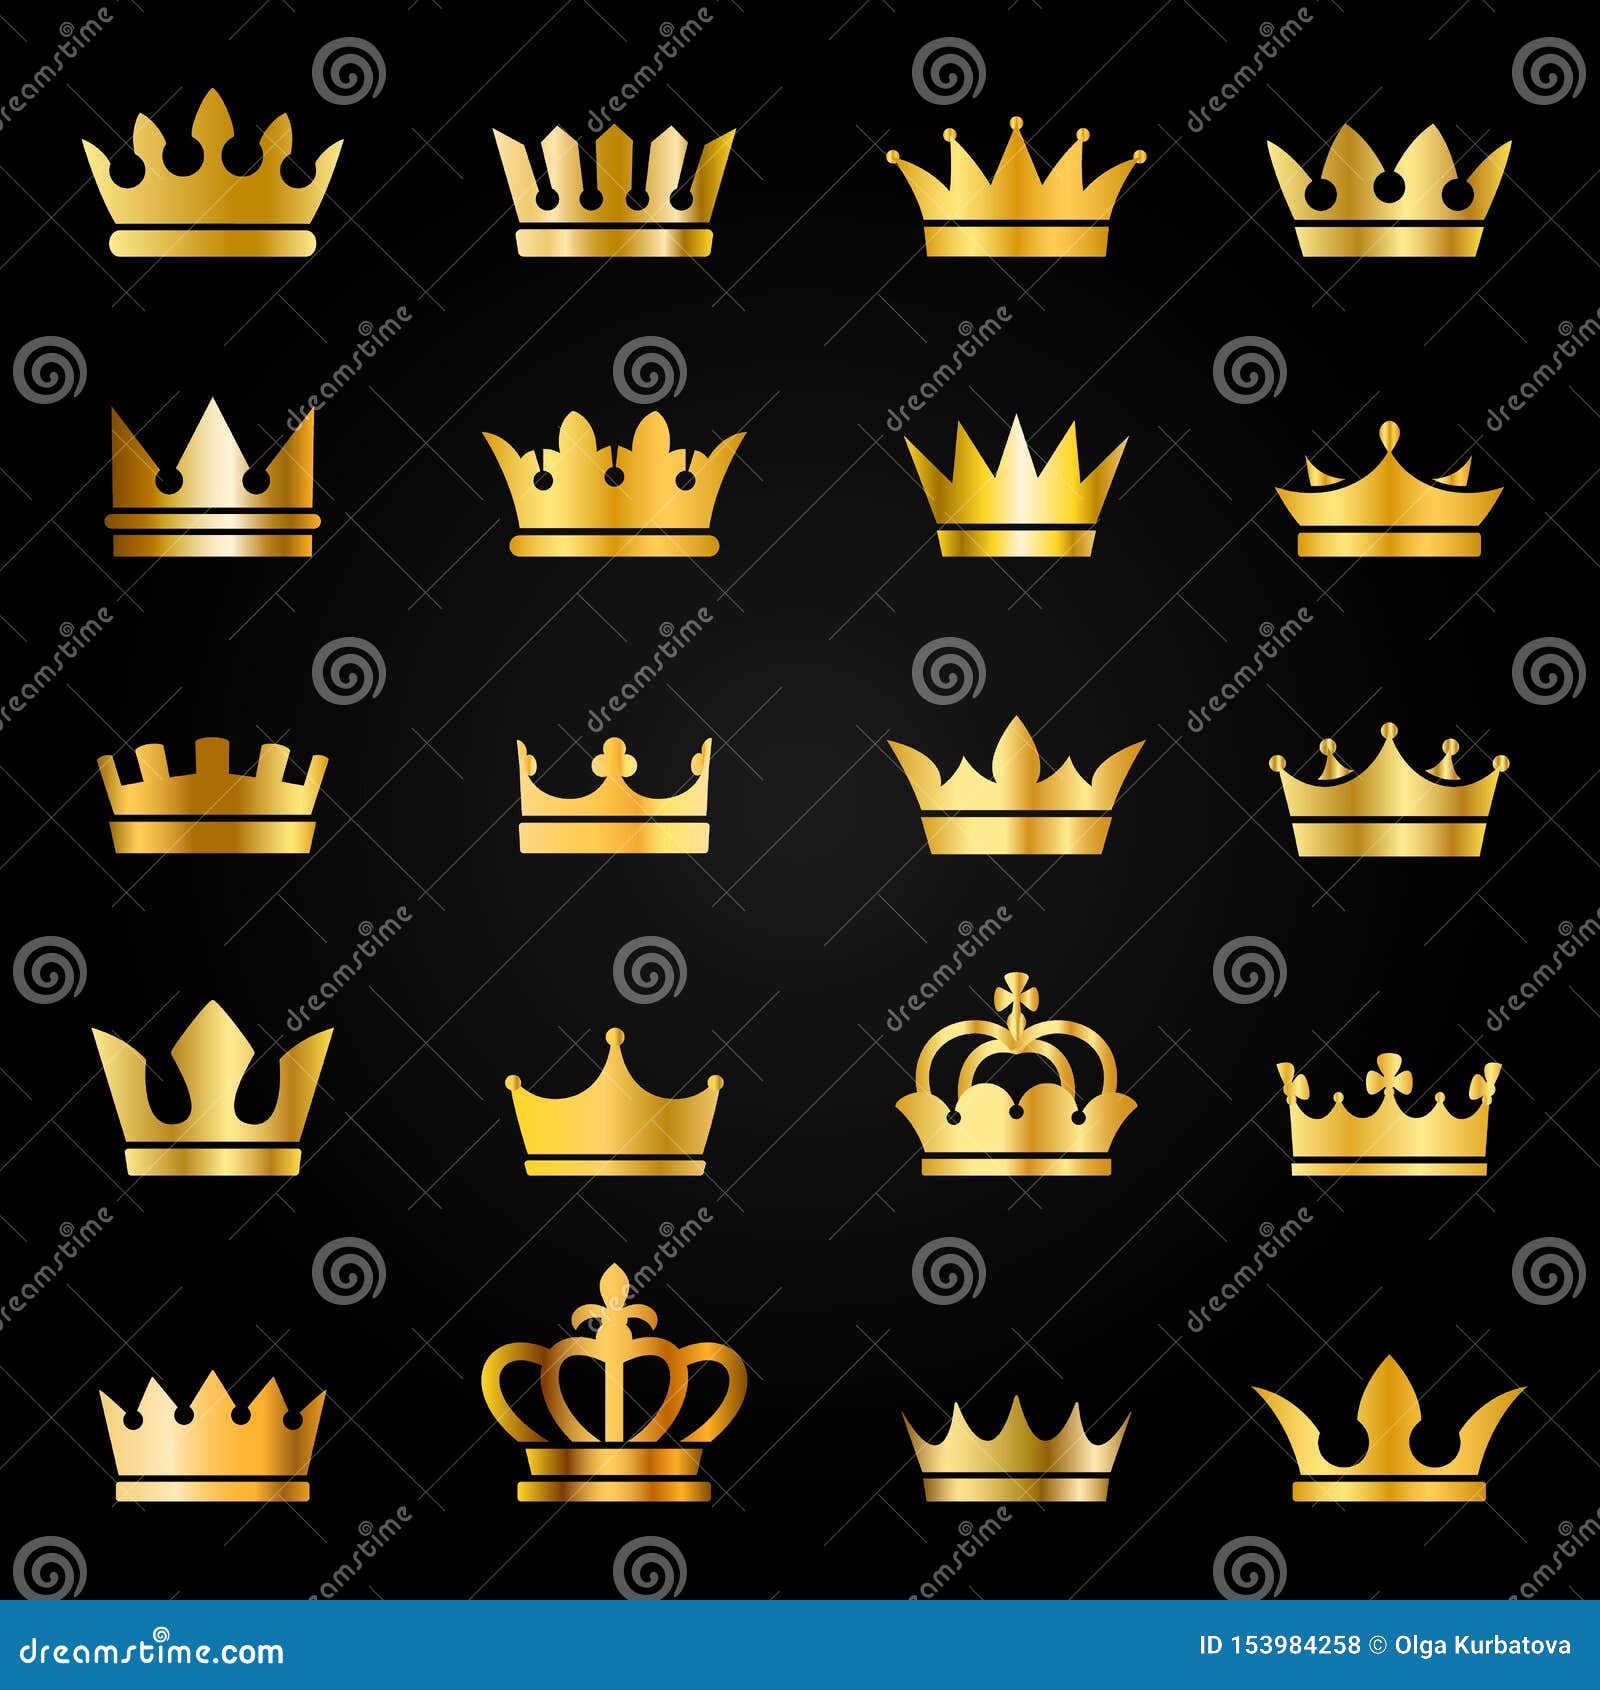 gold crown icons. queen king crowns luxury royal on blackboard, crowning tiara heraldic winner award jewel  set